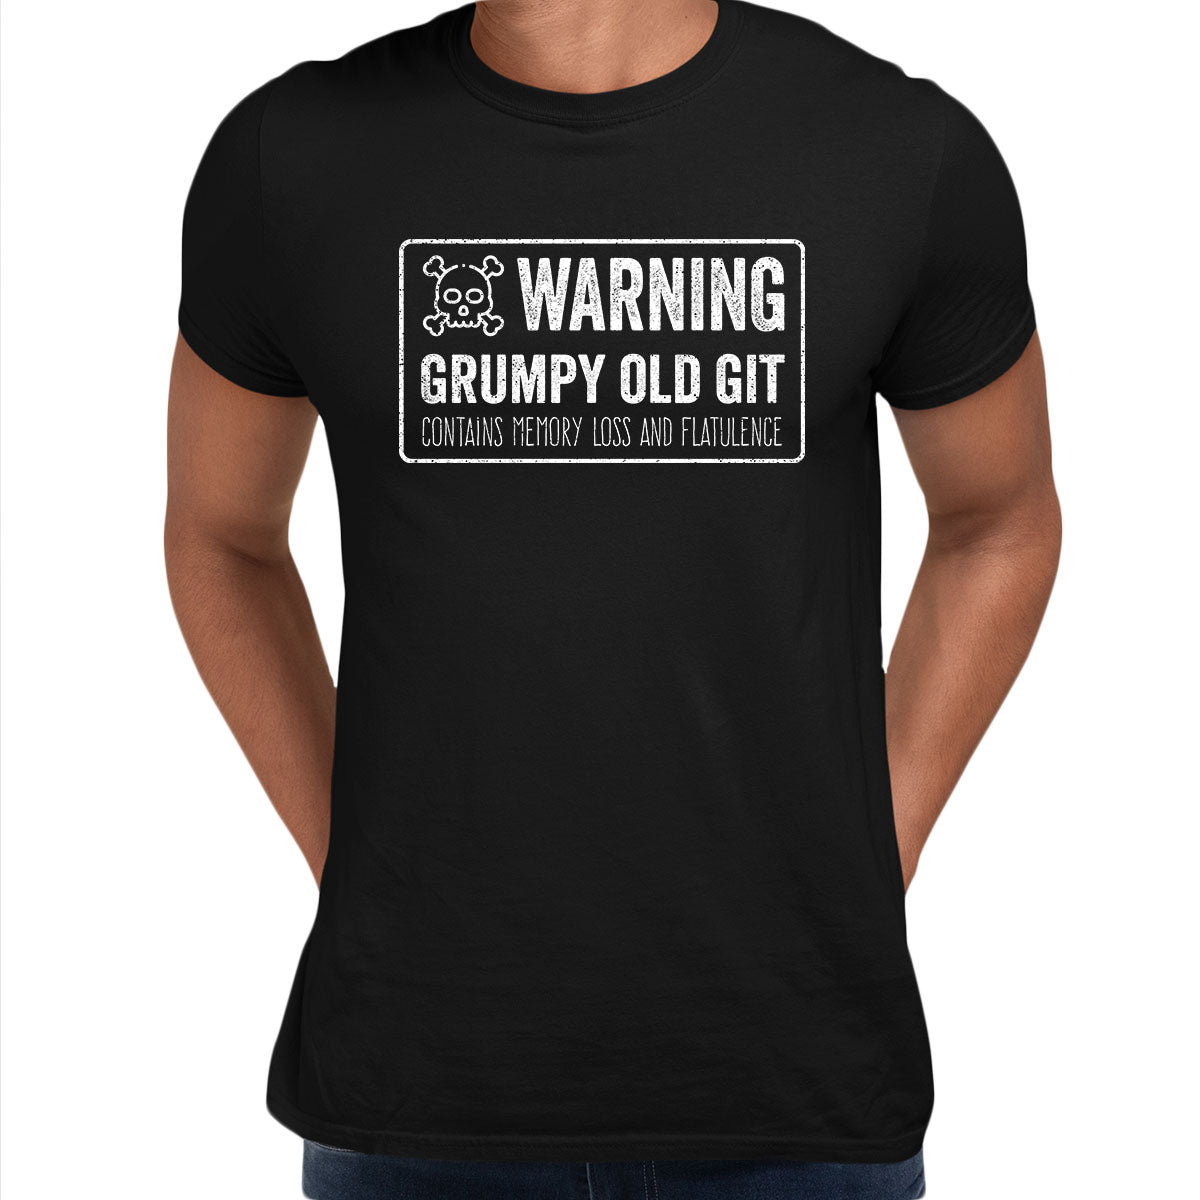 Warning grumpy old git Mens Funny T-Shirt Novelty Joke T-Shirt Rude Gift Him Dad Birthday Slogan Unisex T-Shirt - Kuzi Tees